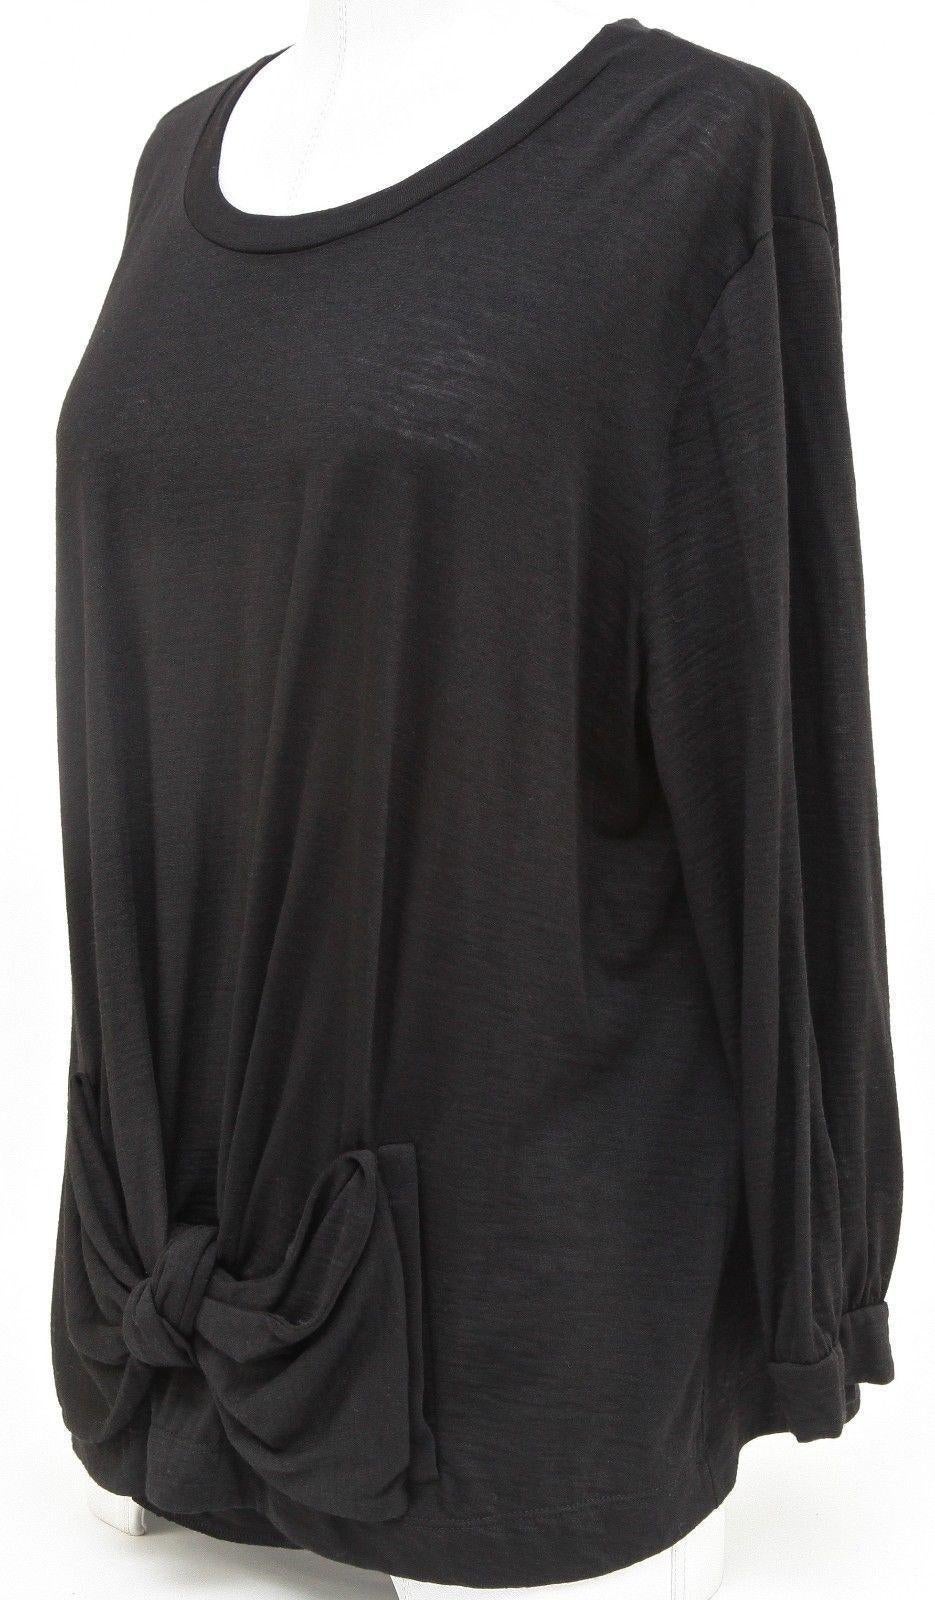 Noir See By Chloe Sweater Knit Top Black 3/4 Length Sleeve Scoop Neck Sz F 42 US 10 en vente